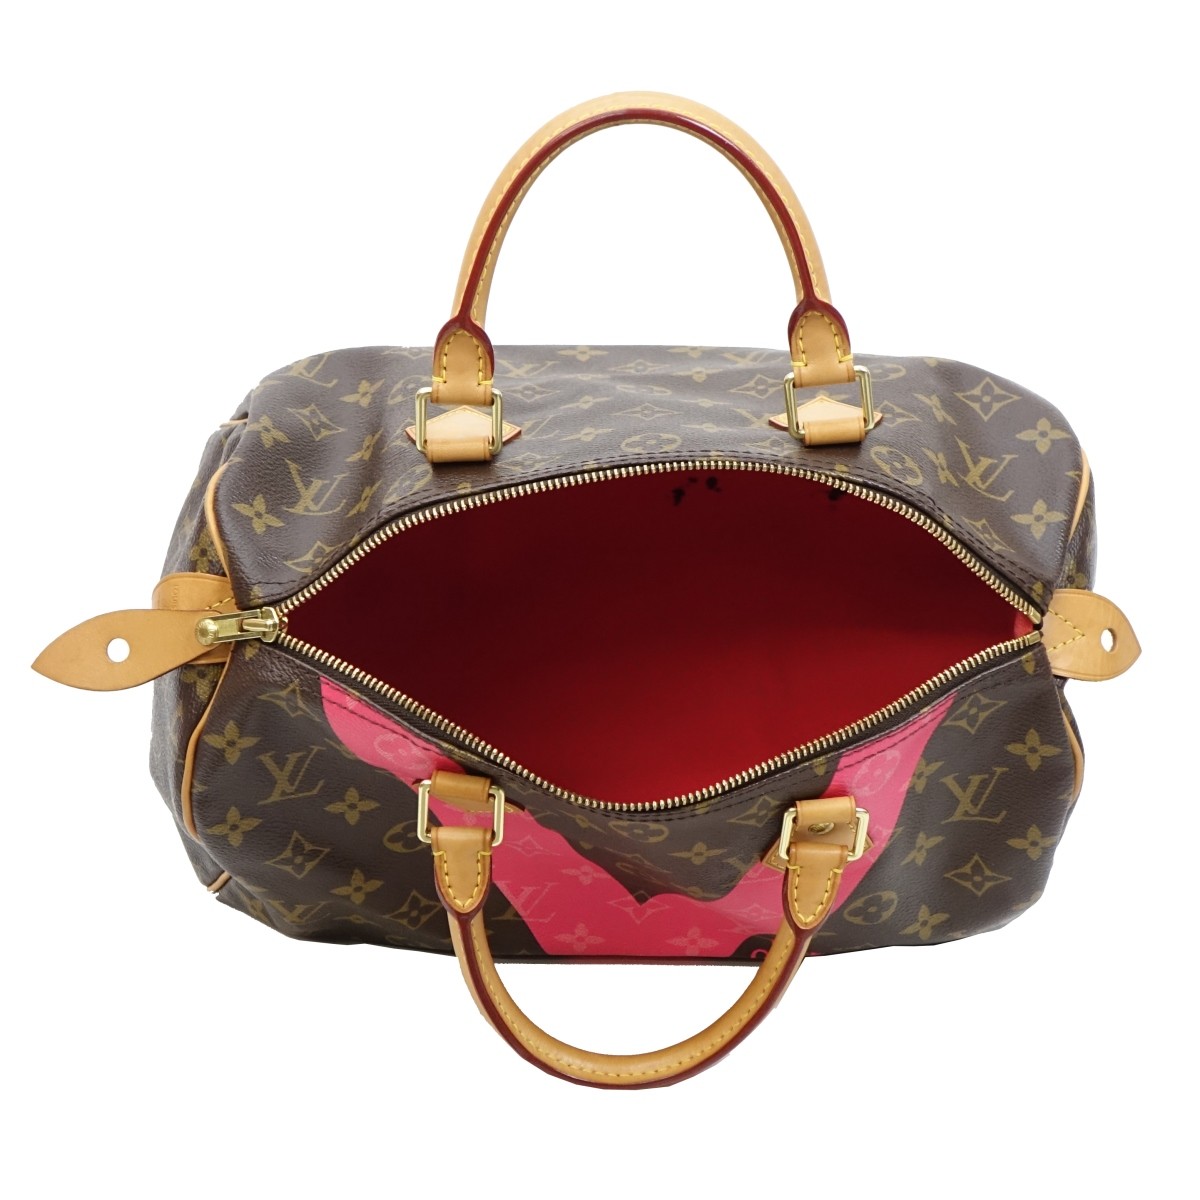 Louis Vuitton Voyage Speedy 30 Handbag